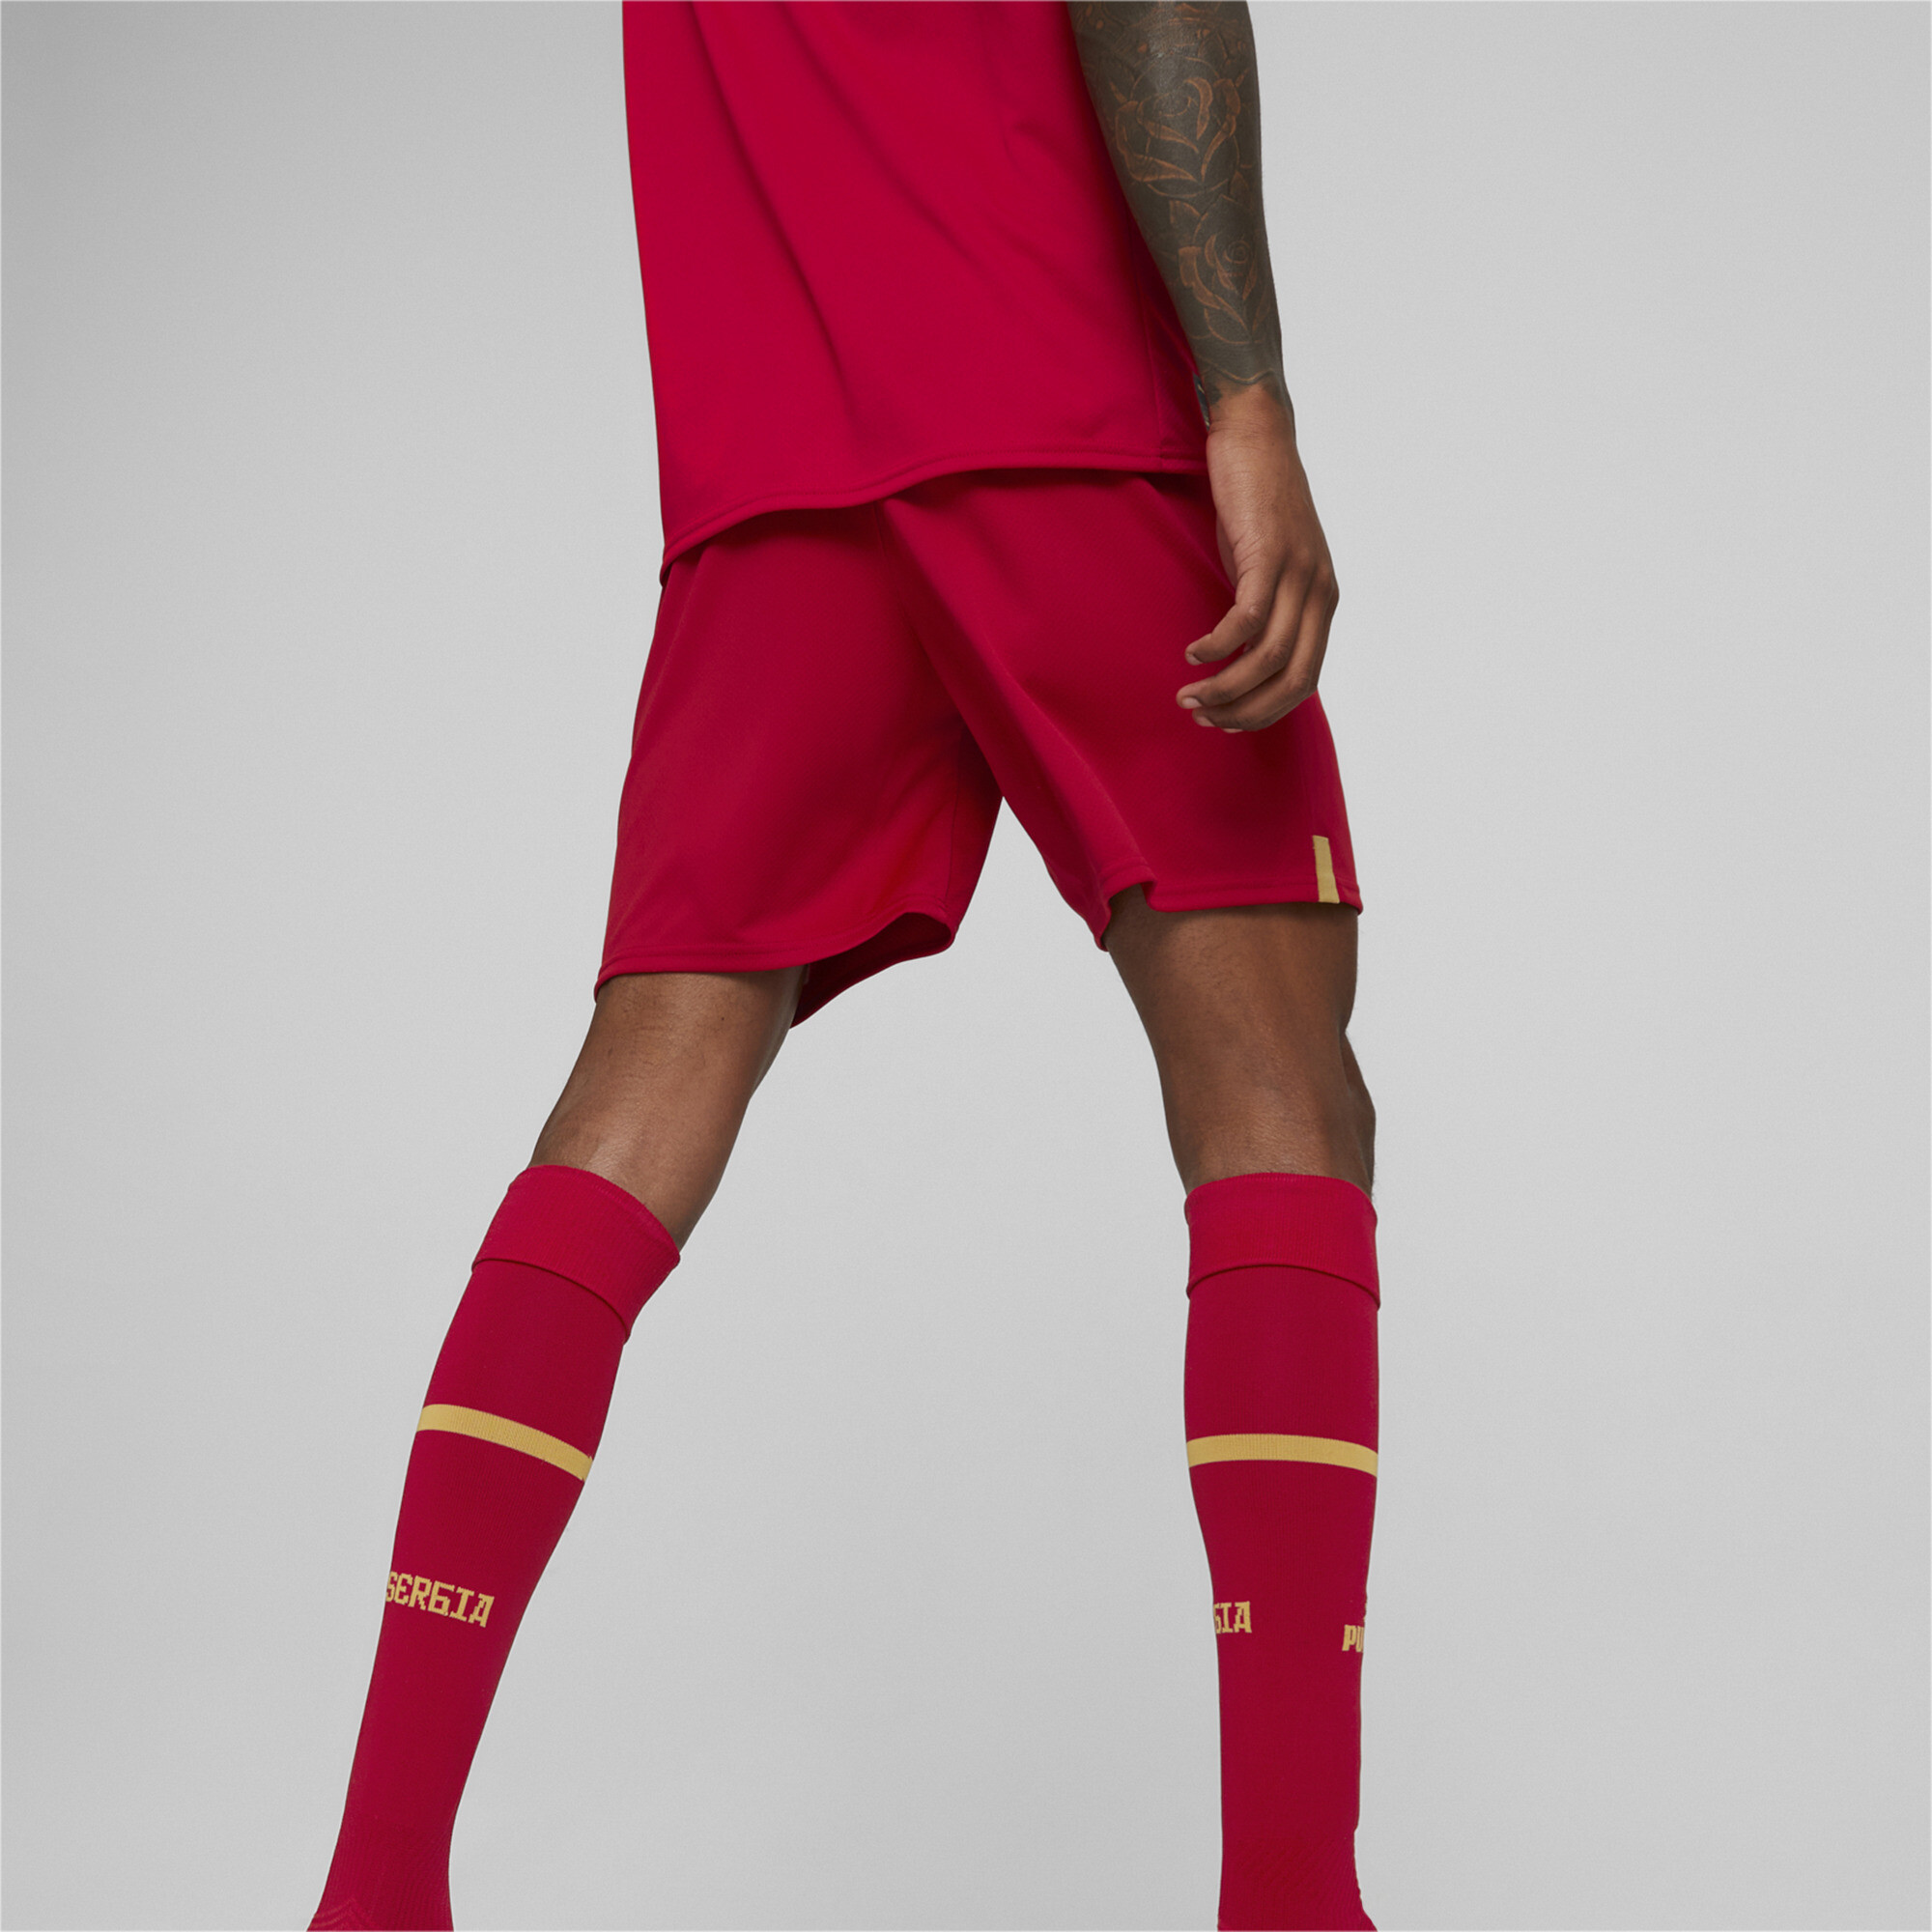 Men's Puma Serbia 22/23 Replica Shorts, Red, Size XS, Clothing